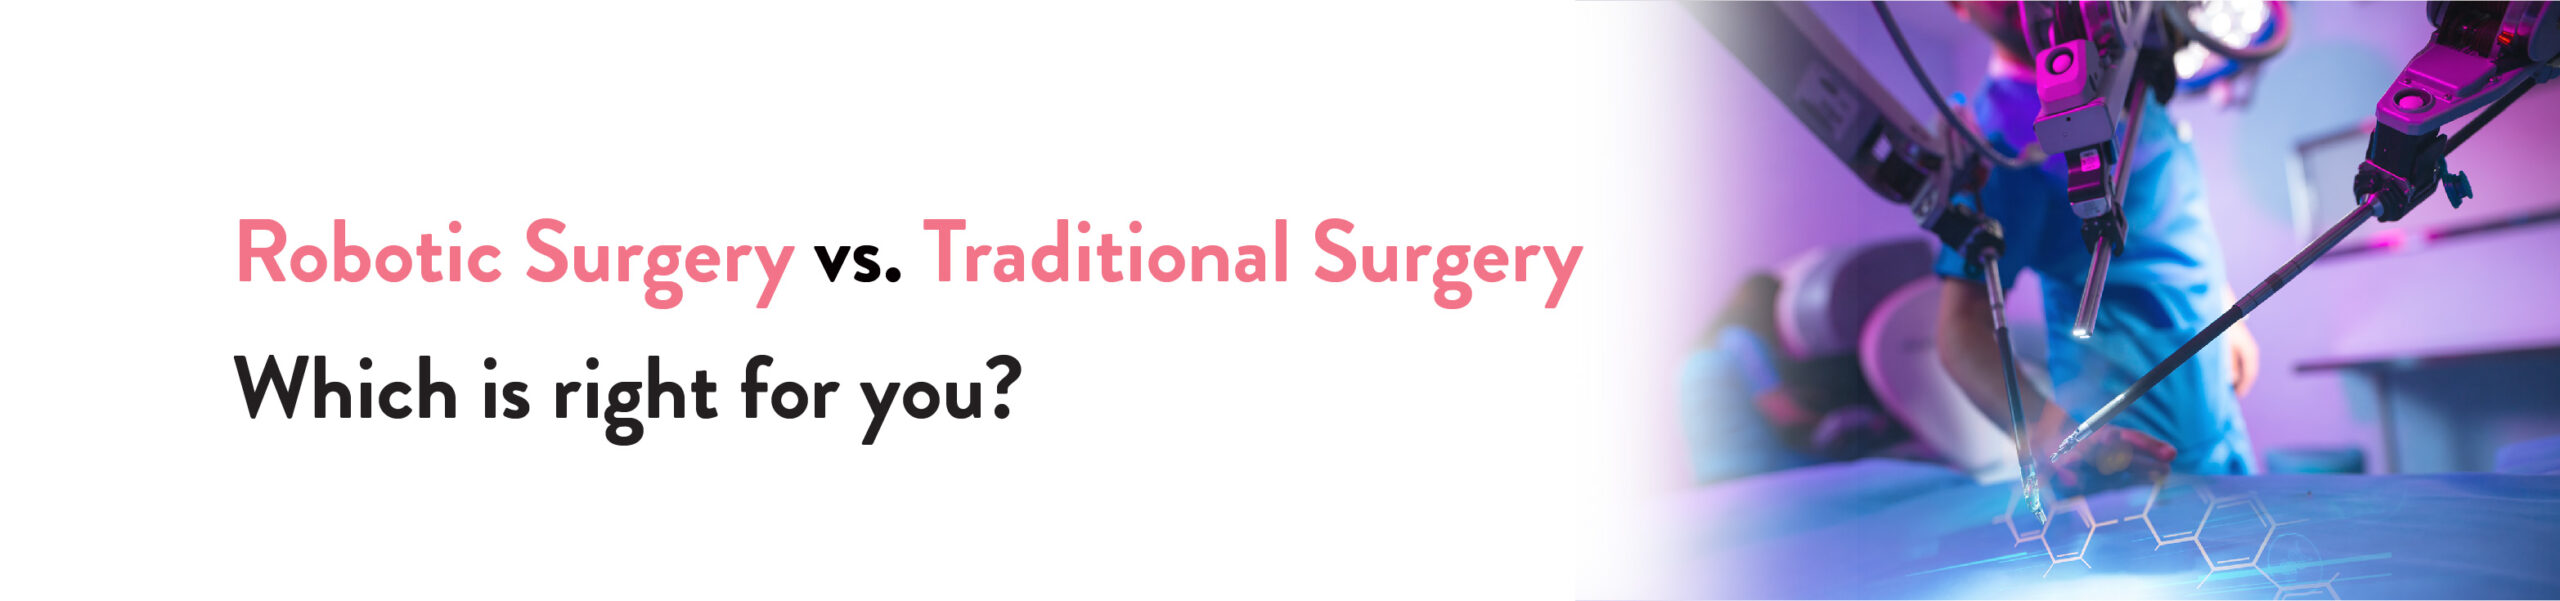 Robotic Surgery vs. Traditional Surgery